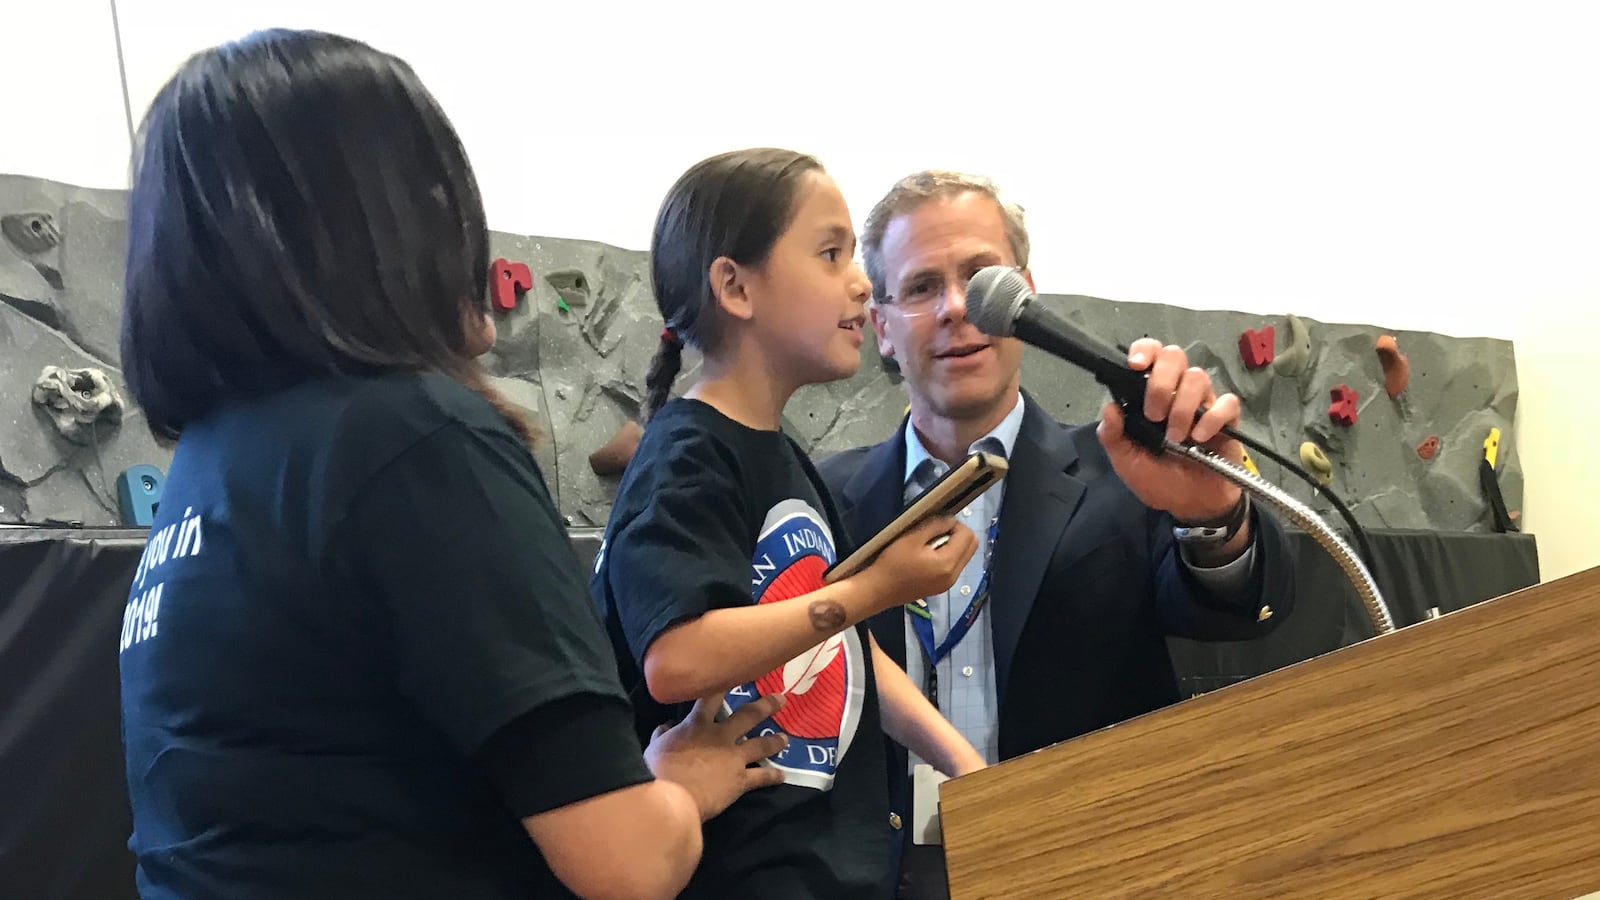 Tanski Chrisjohn gets help adjusting the microphone at a school board meeting from Denver Superintendent Tom Boasberg.